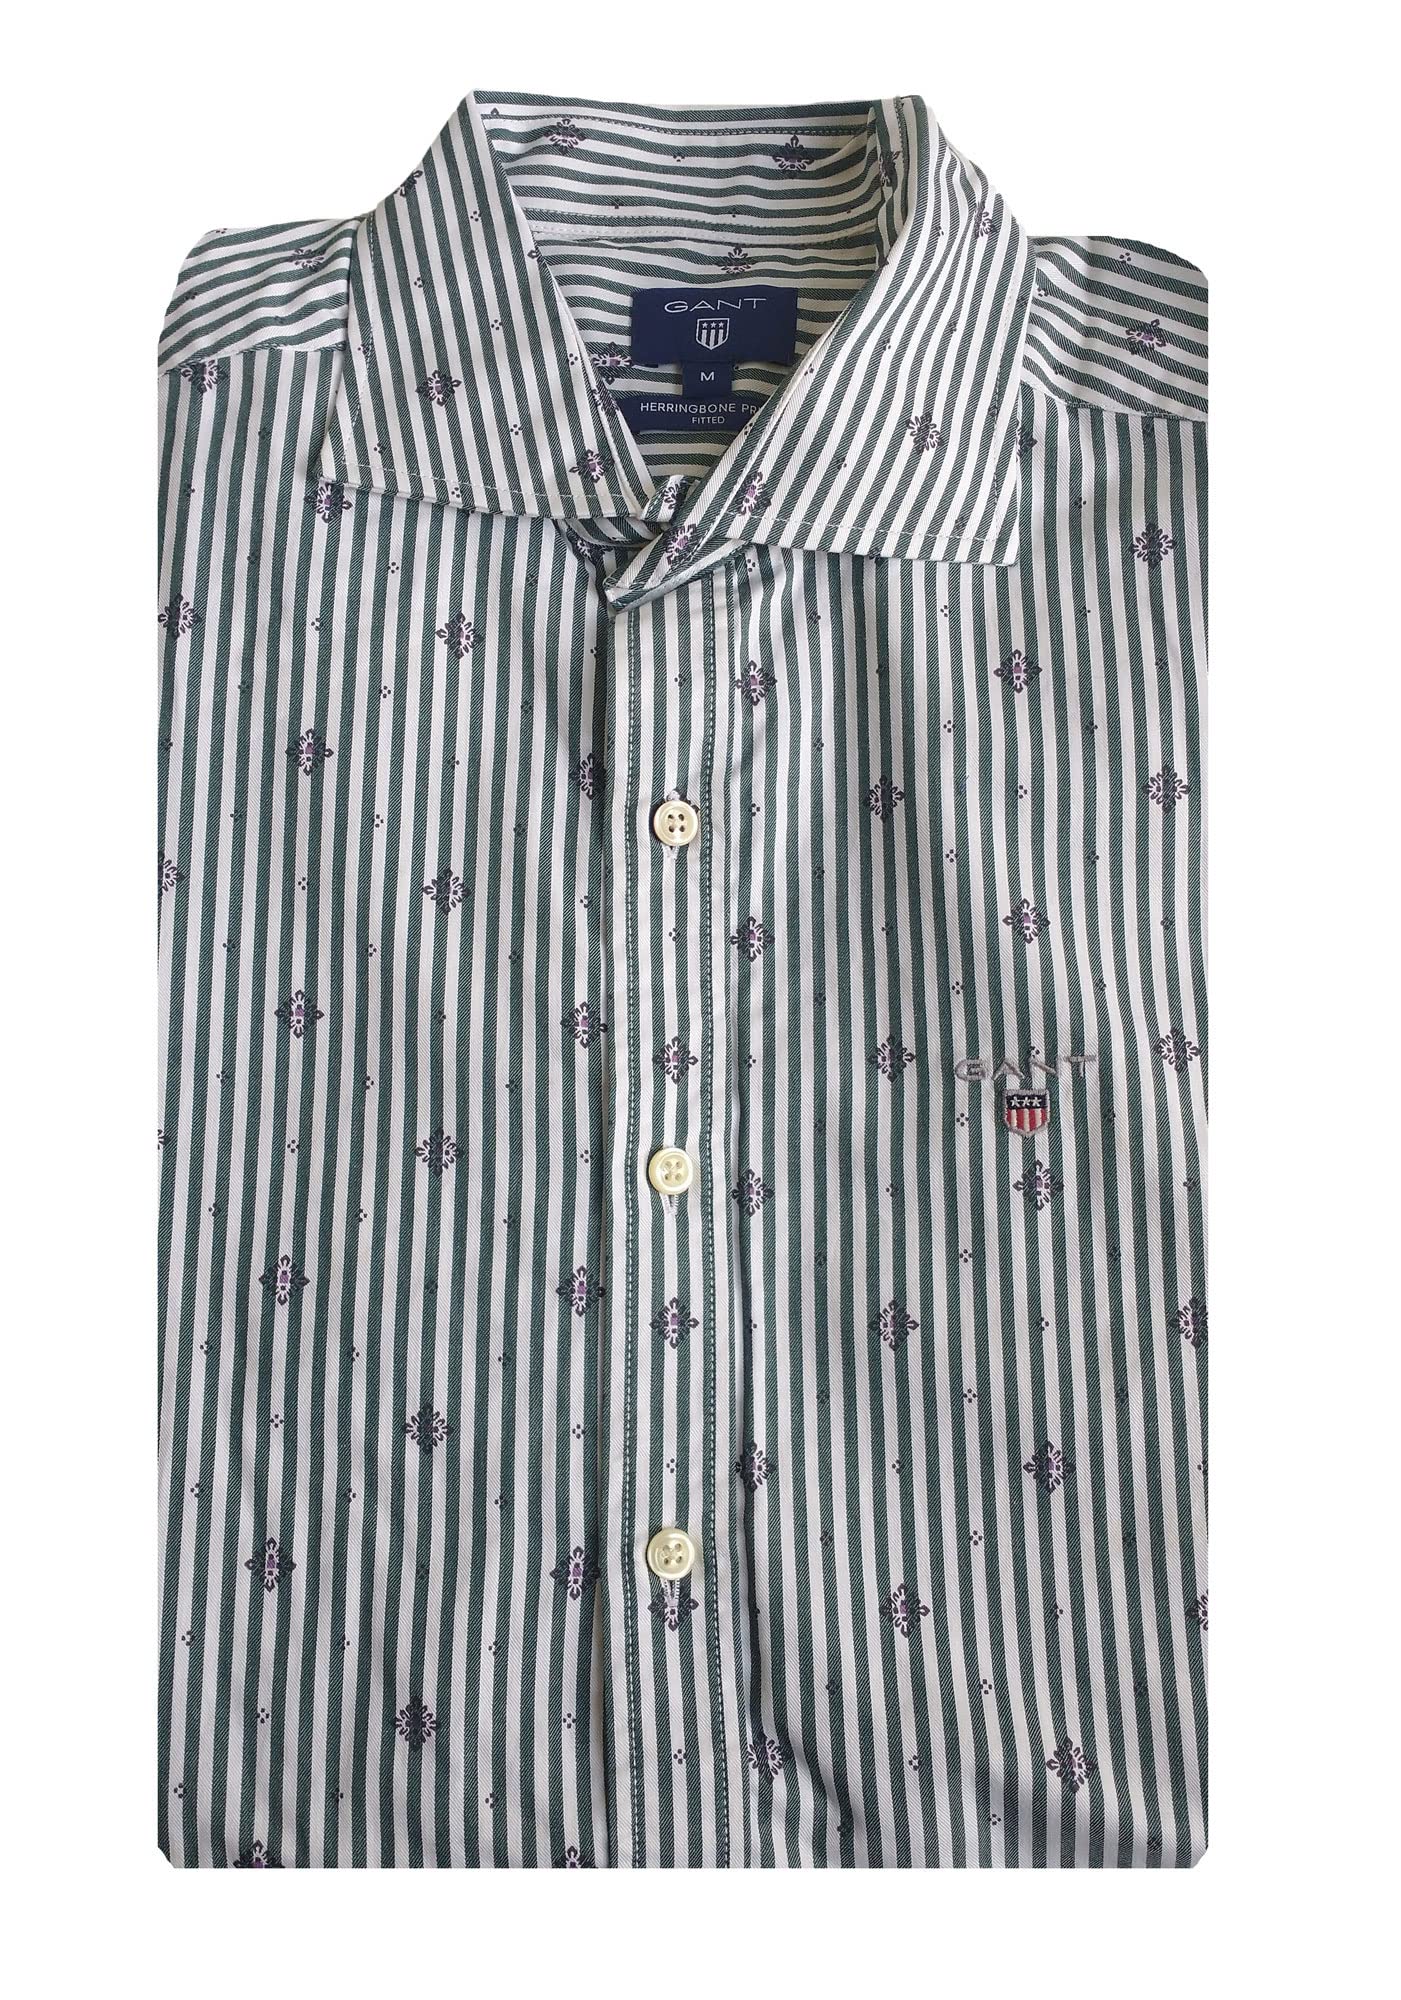 GANT Men's Pine Green Herringbone Banker Fitted Shirt 364577 Size M